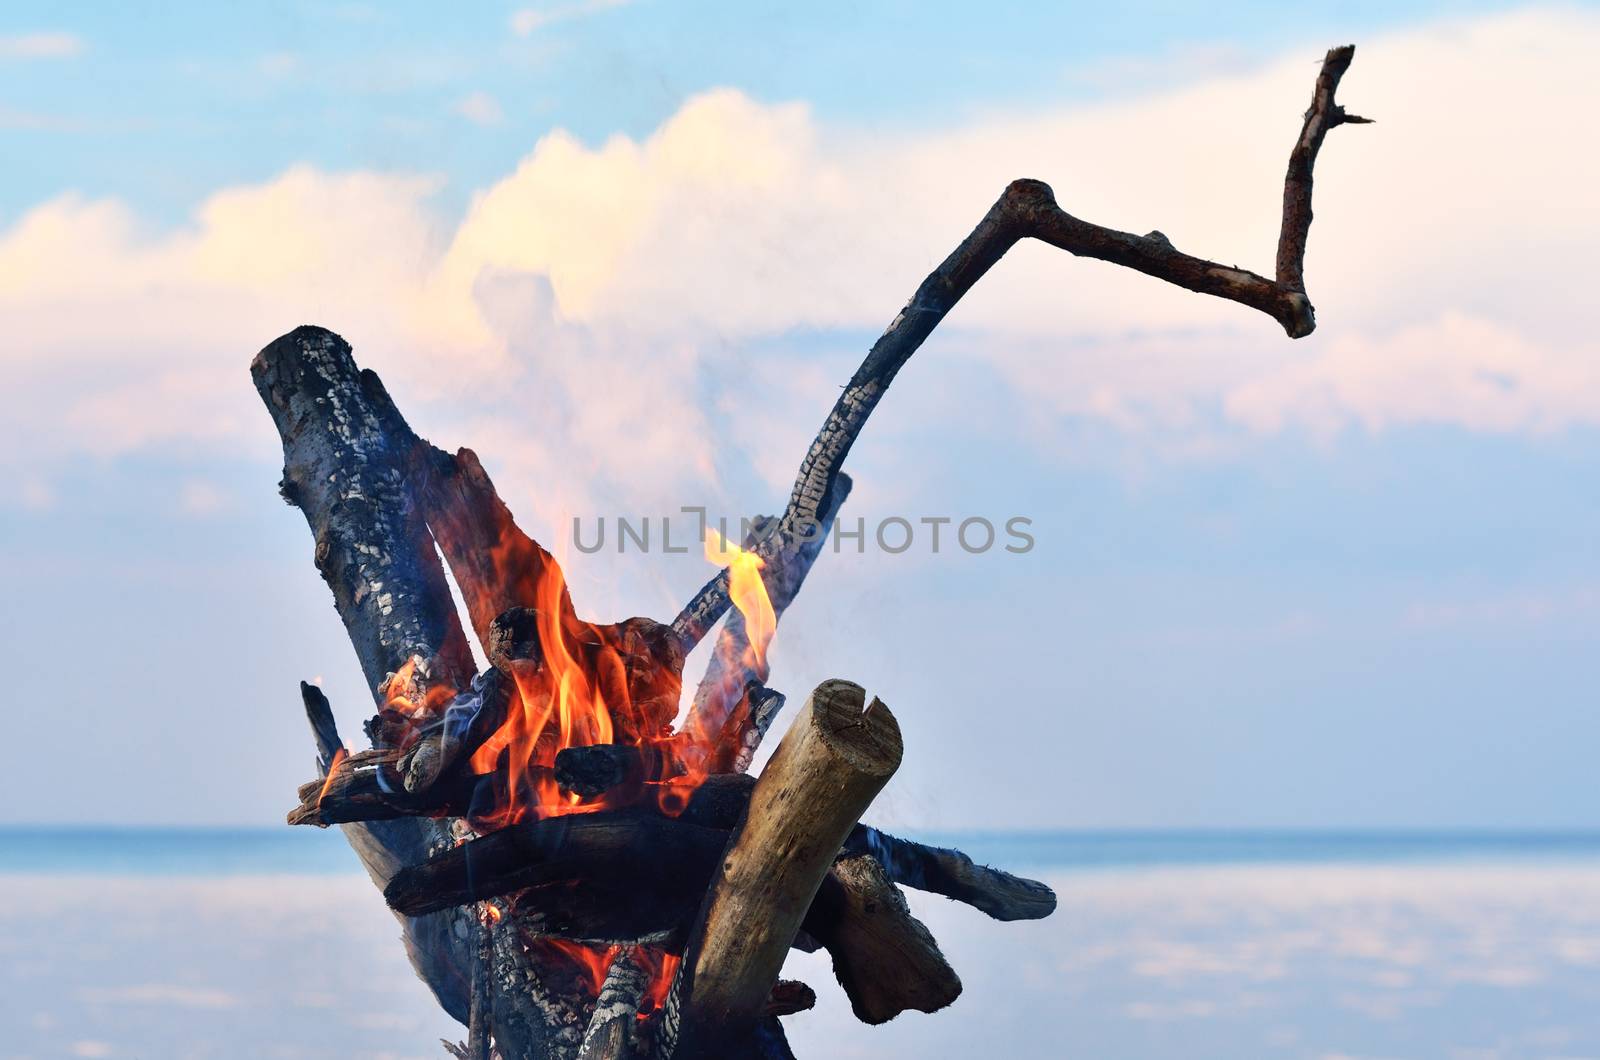 Burning firewood on the seashore